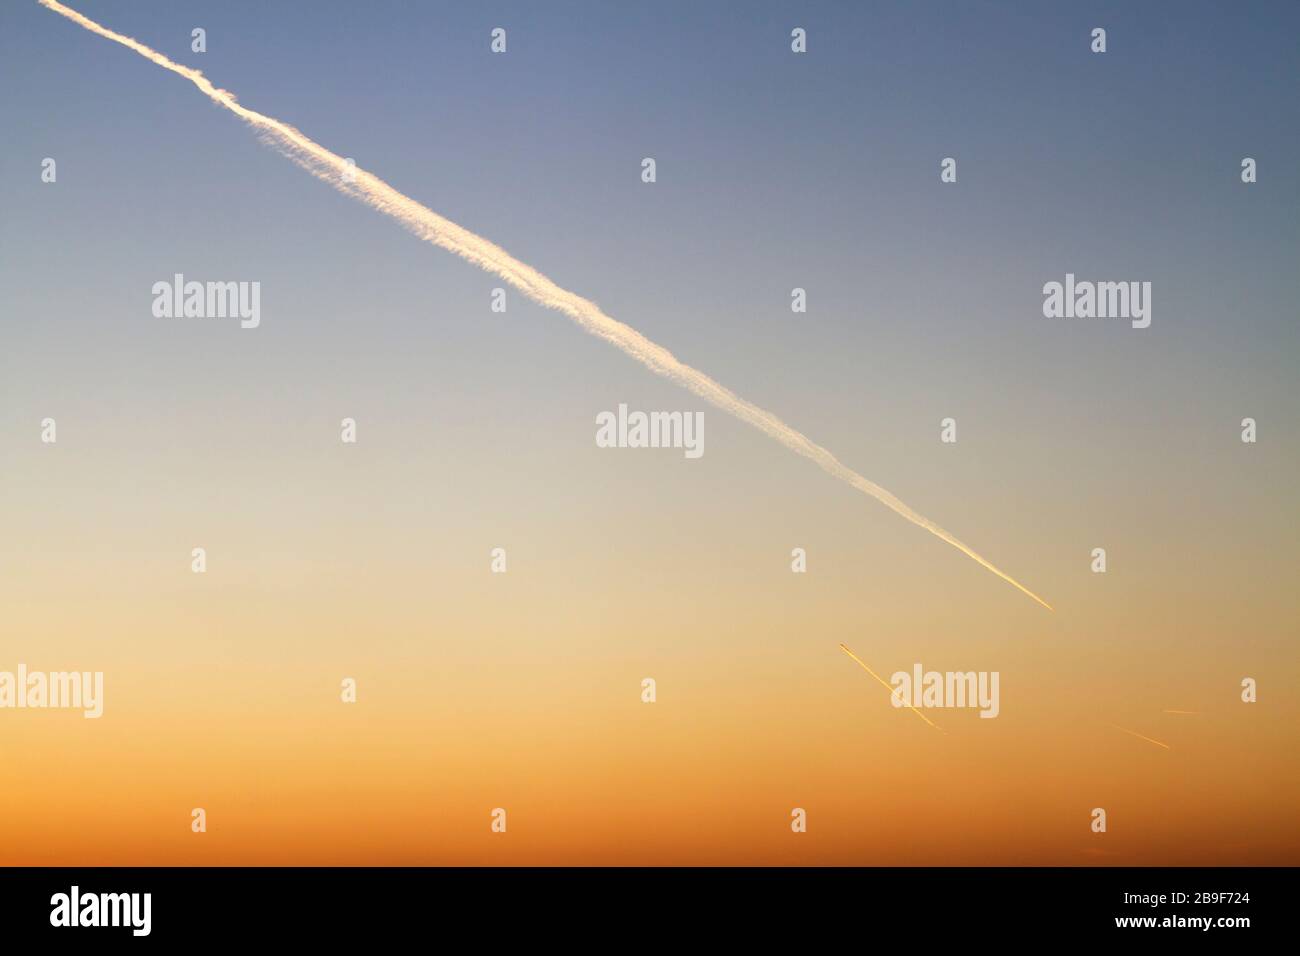 Kondensstreifen am Himmel bei Sonnenuntergang oder Sonnenaufgang Stockfoto